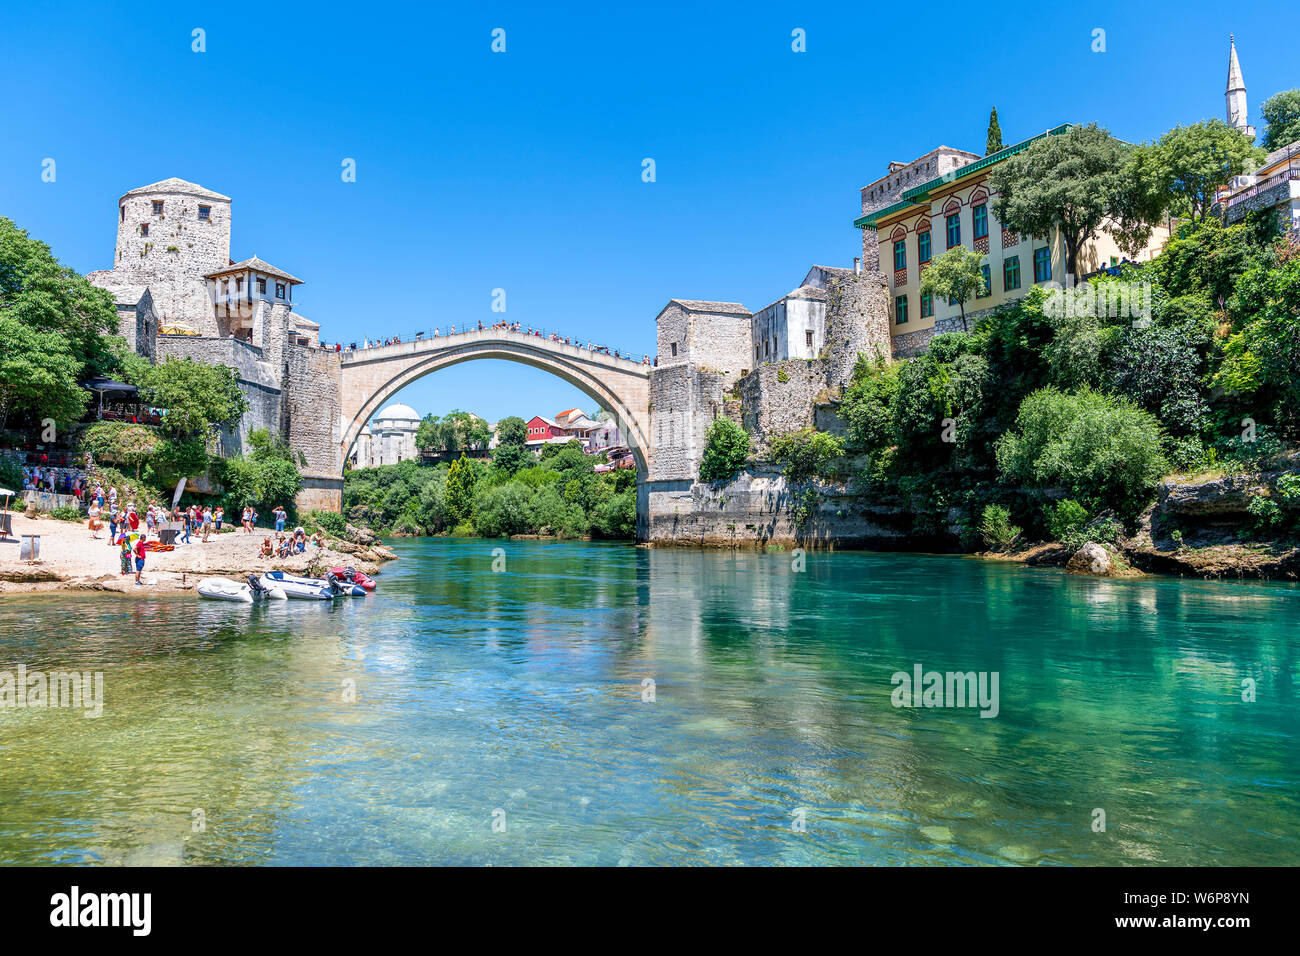 The Old Bridge (Stari Most) in Mostar, Bosnia and Herzegovina Stock Photo